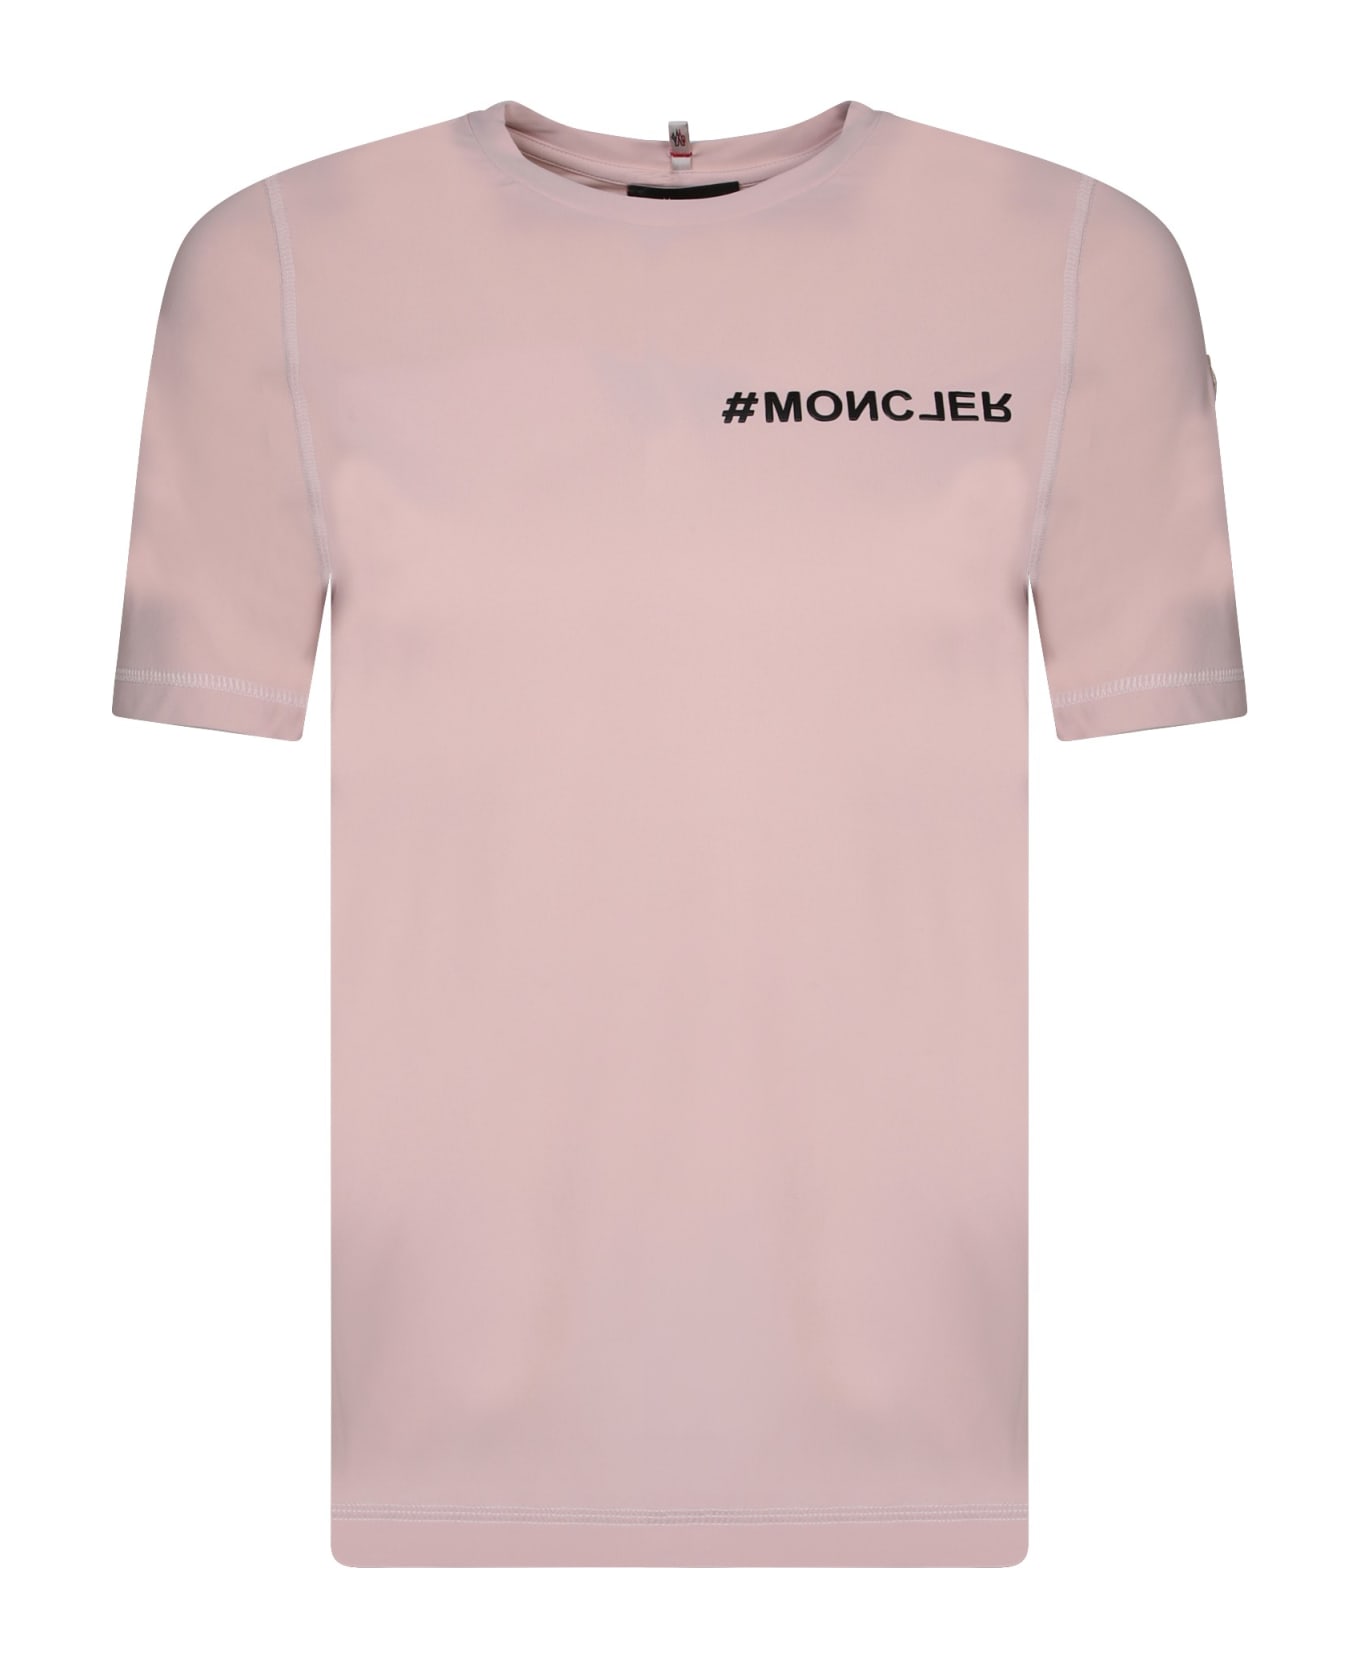 Moncler Grenoble Moncler Logo T-shirt In Pink - Pink